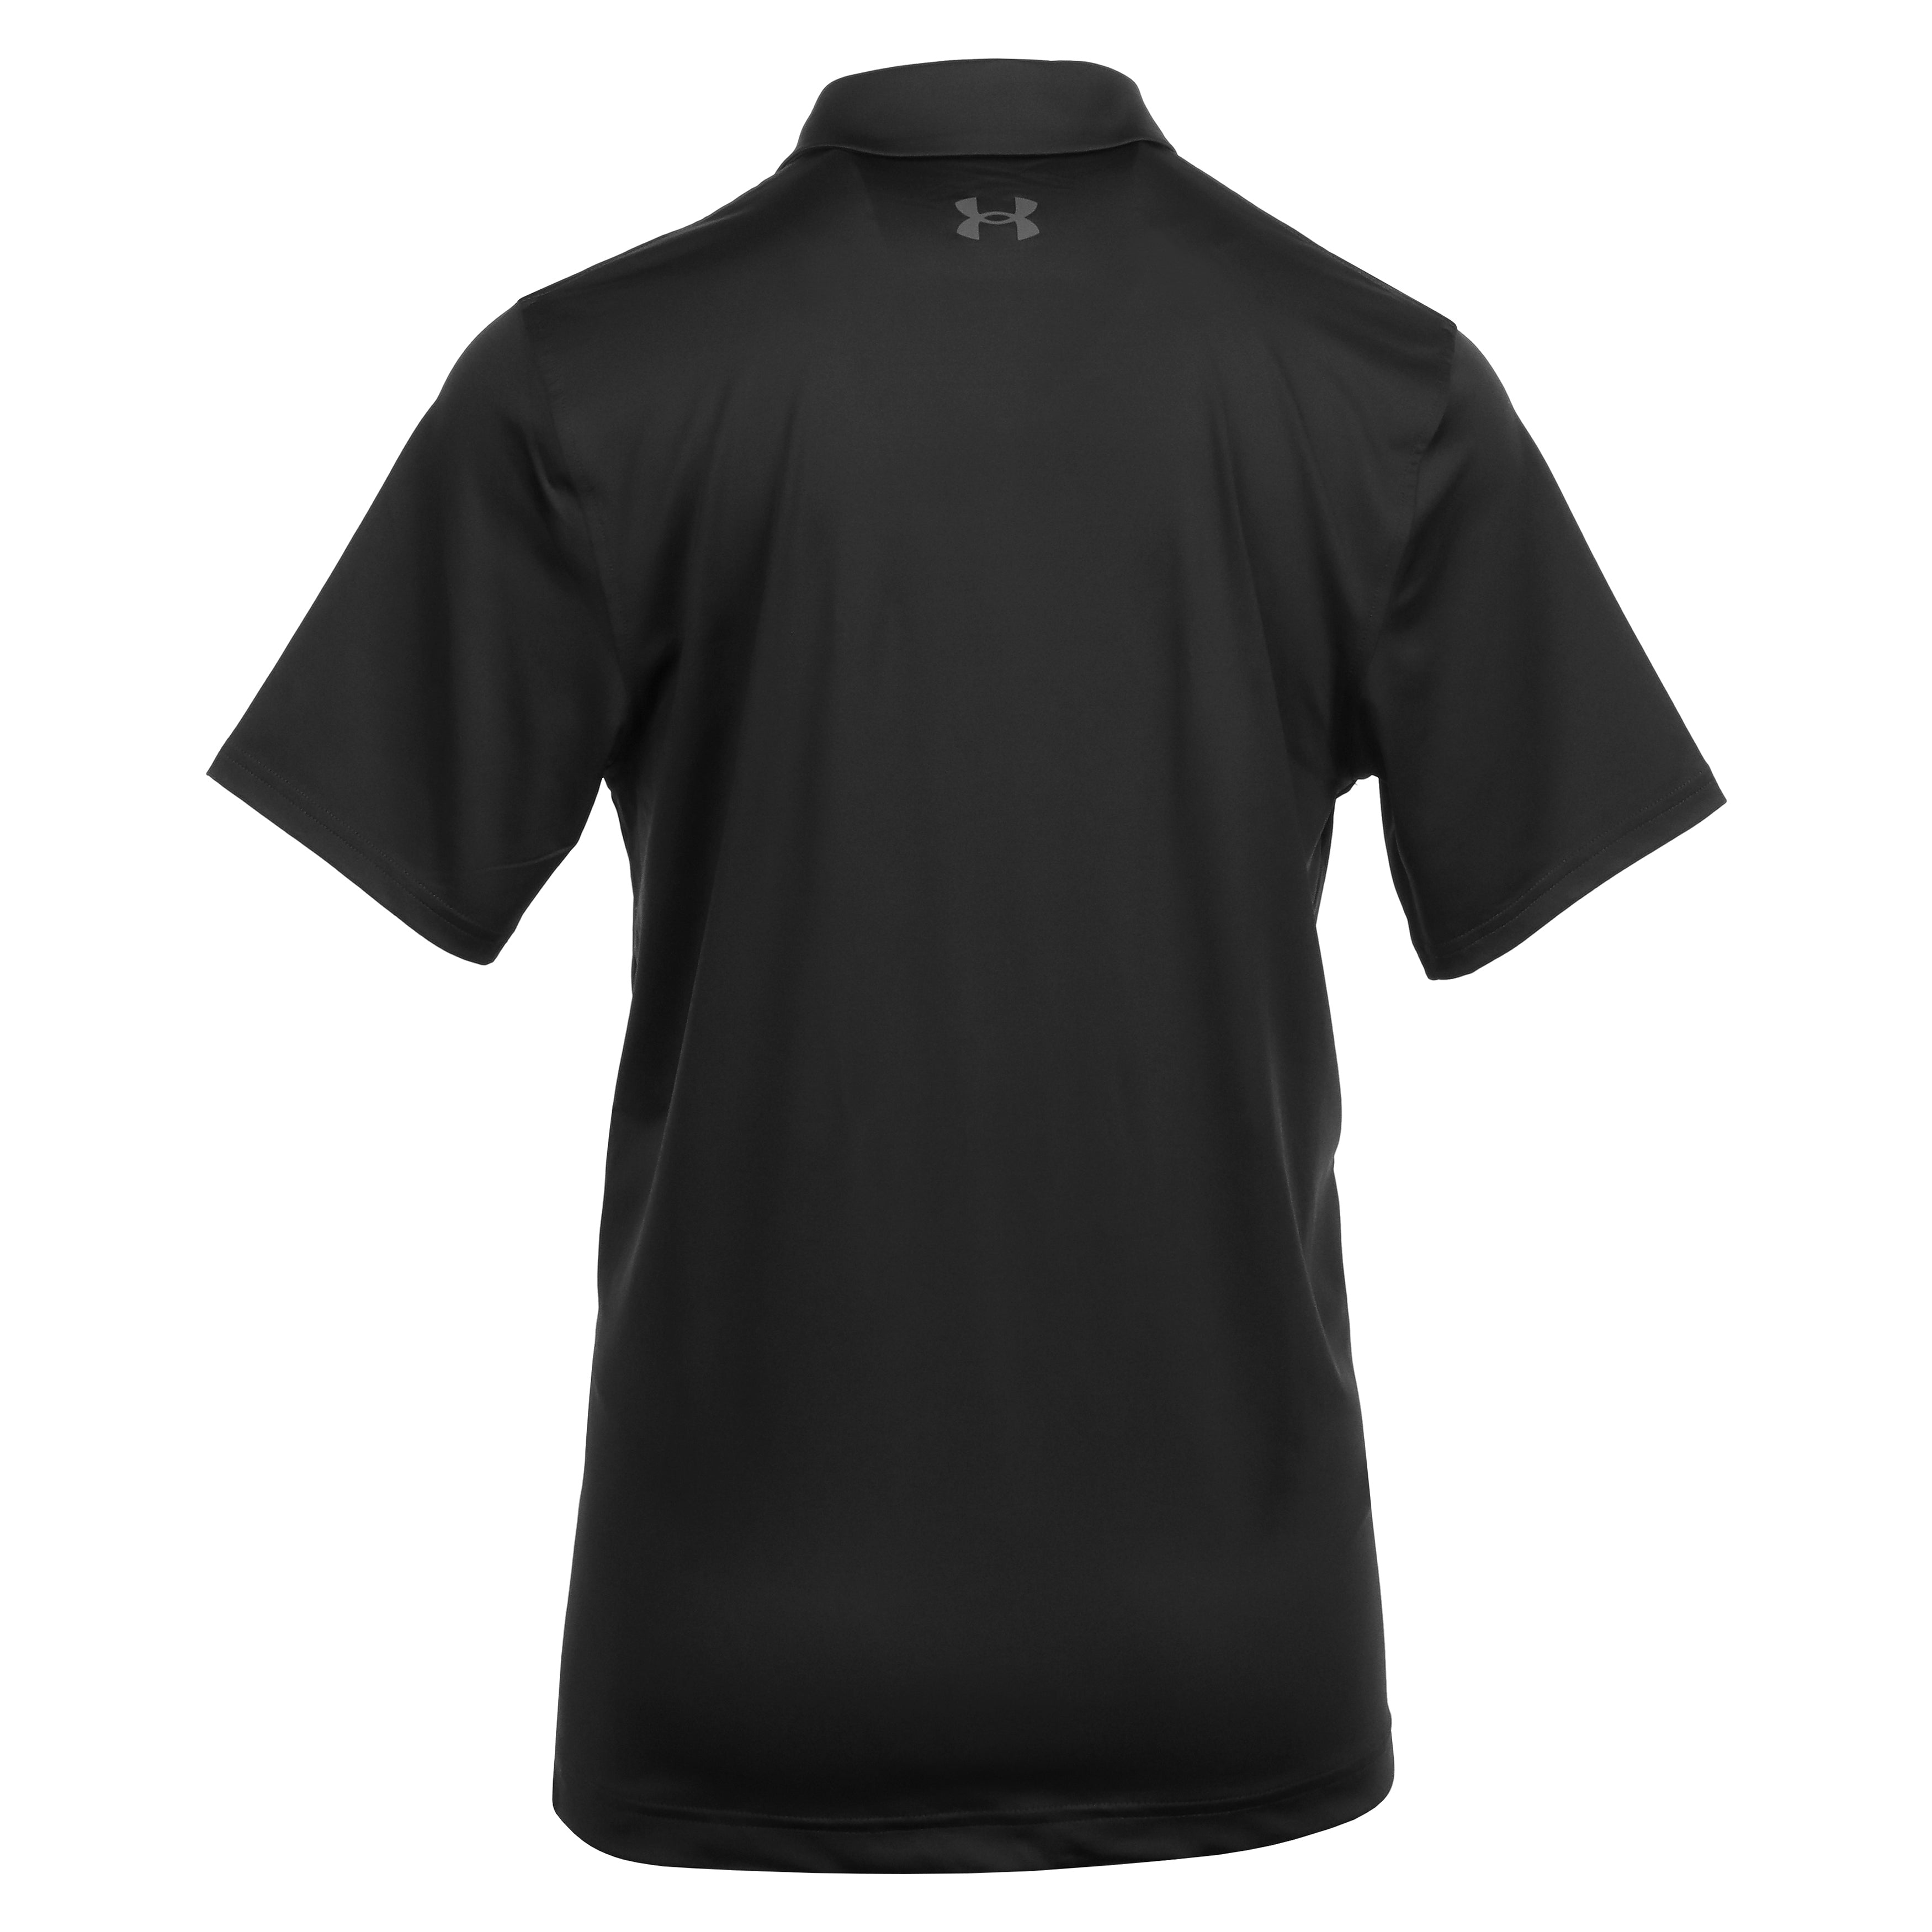 Under Armour Golf T2G Shirt 1383714 Black 001 & Function18